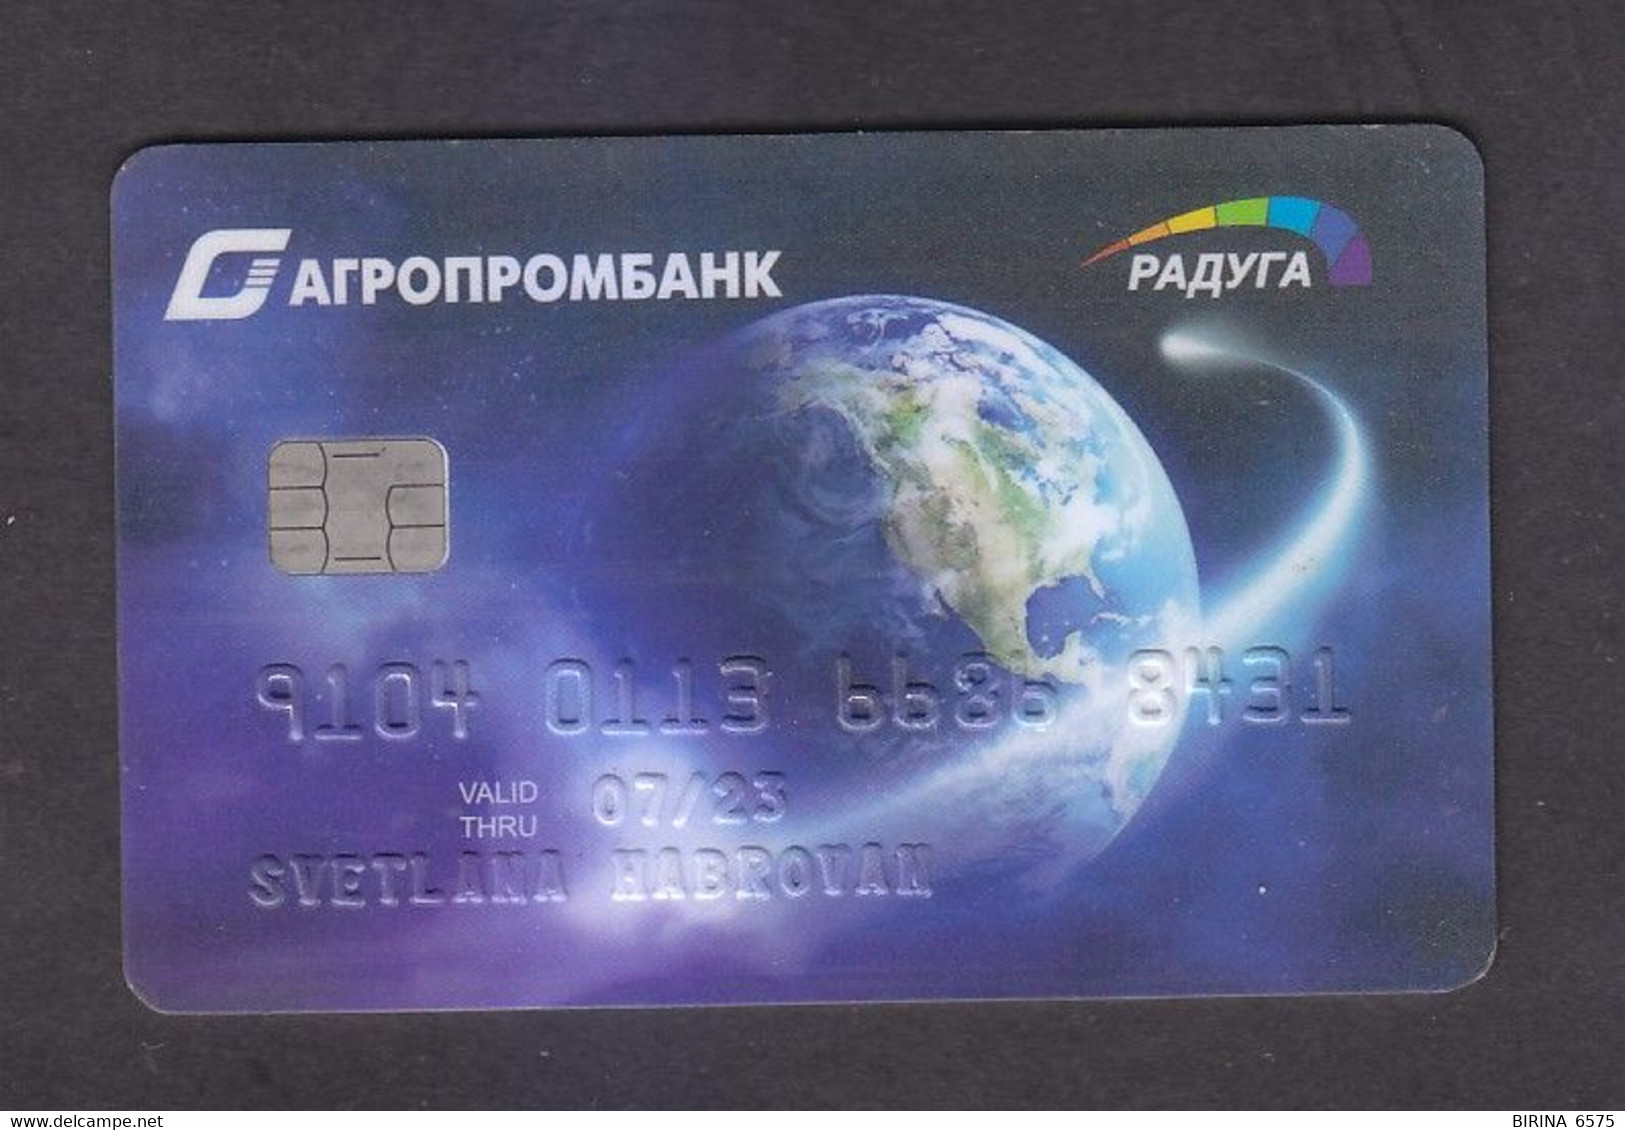 BANK CARD. AGROPROMBANK. MOLDOVA. TRANSNISTRIA.  - 1-6 - Moldawien (Moldau)